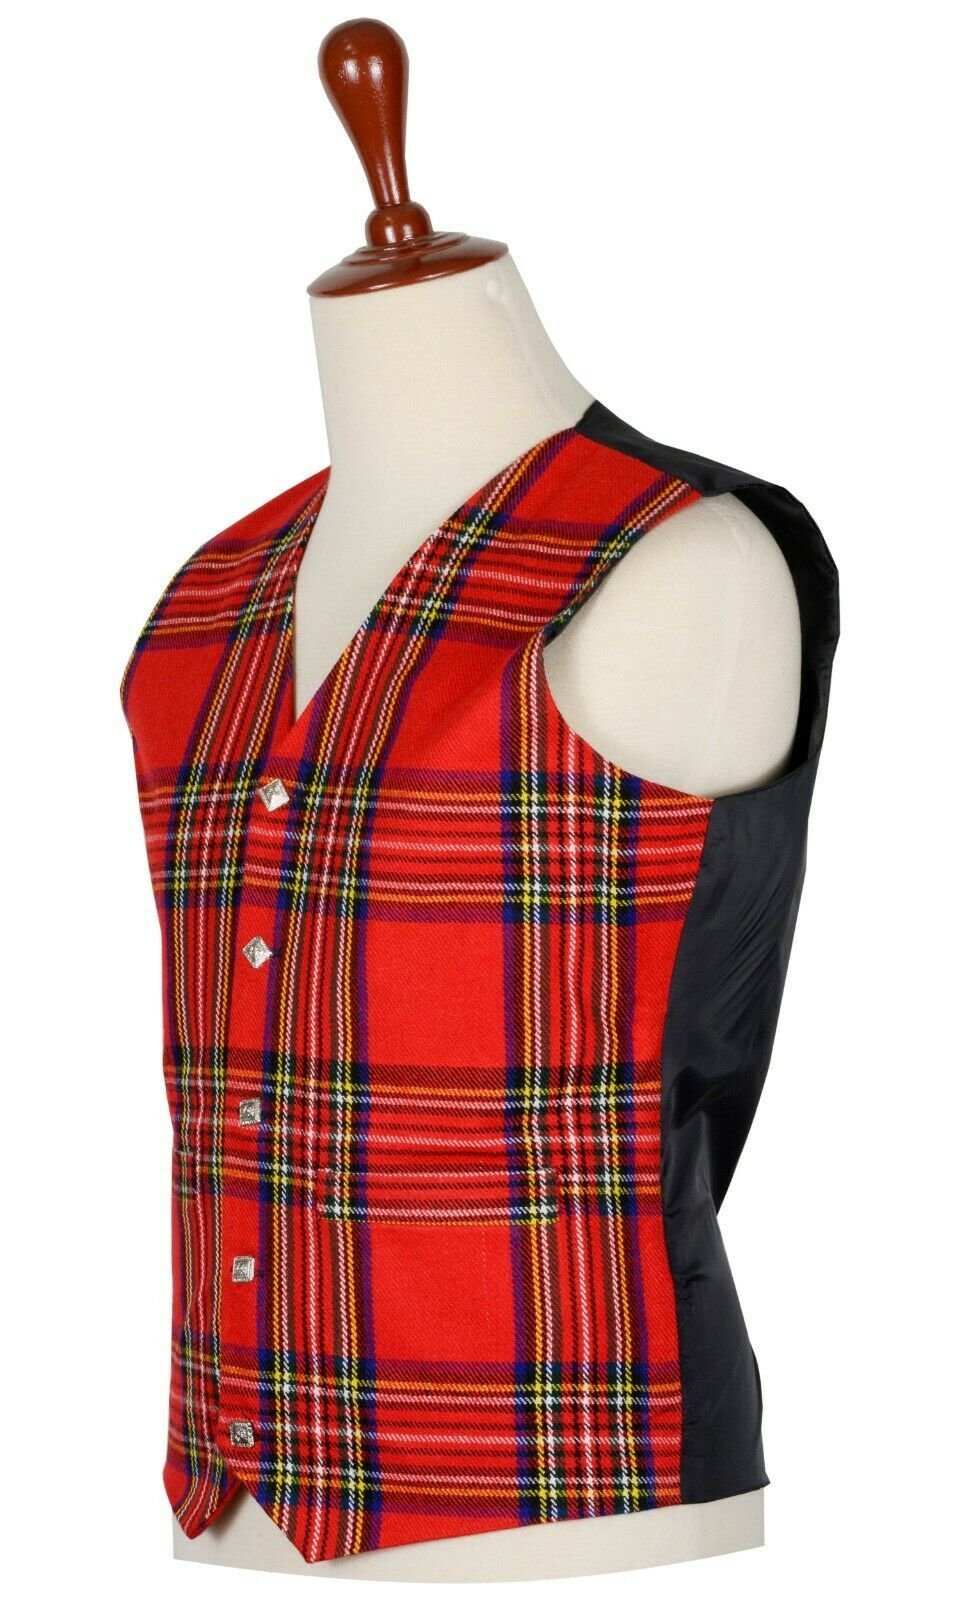 Traditional Scottish Royal Stewart 5 Buttons Tartan Waistcoat / Plaid Vest Kilt Experts